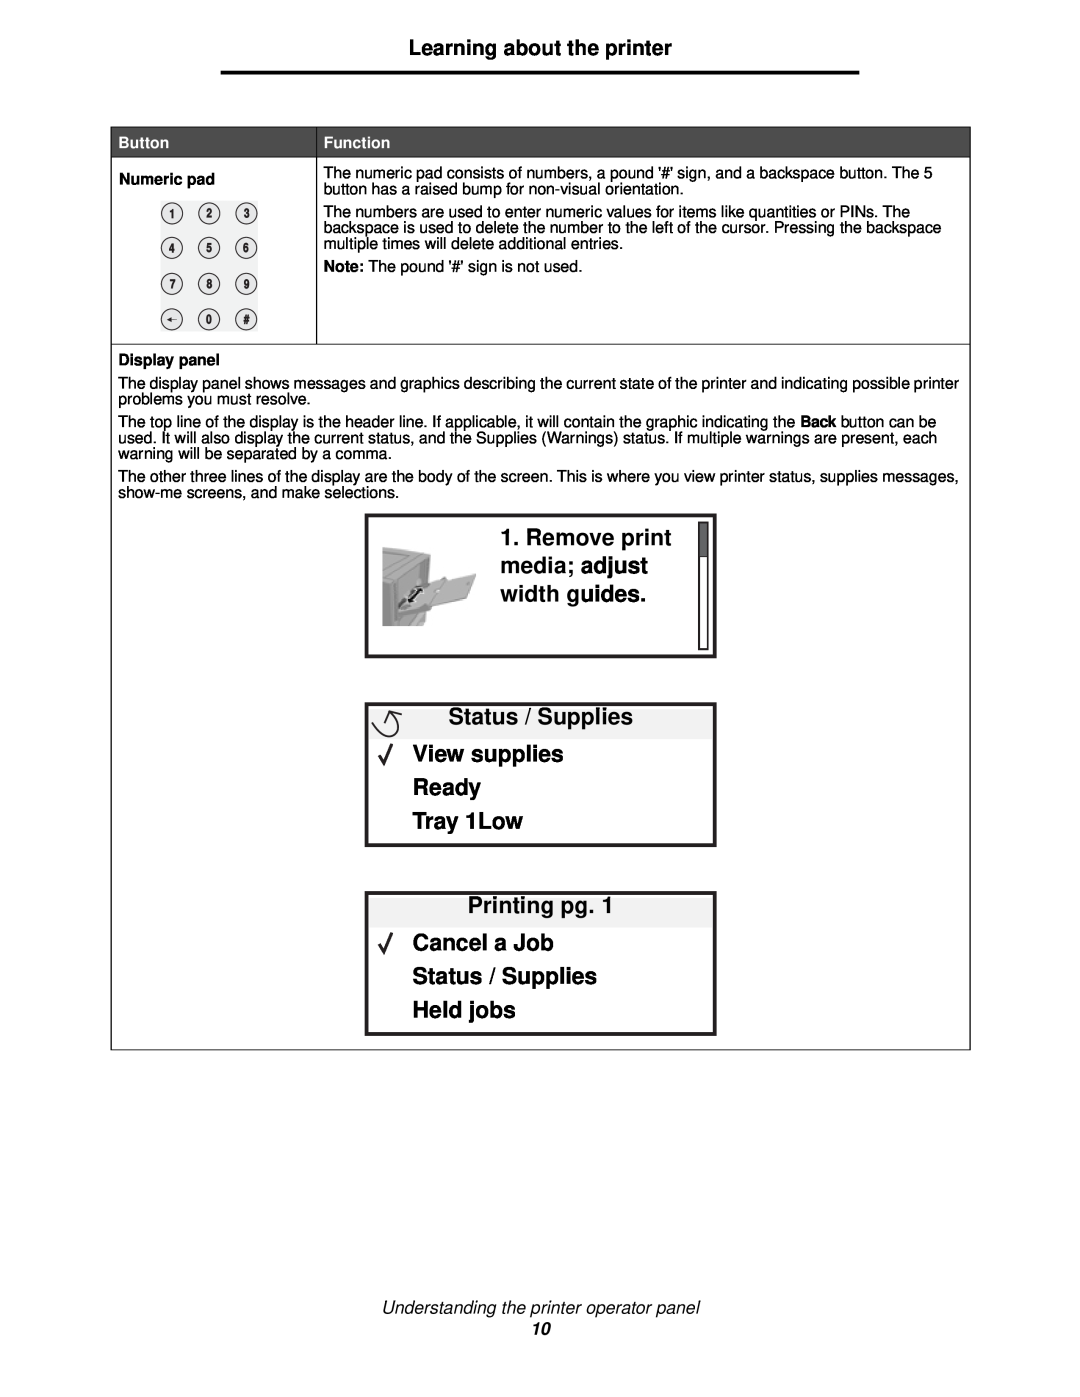 Lexmark 920 manual Remove print media adjust width guides Status / Supplies, Status / Supplies Held jobs, Numeric pad 